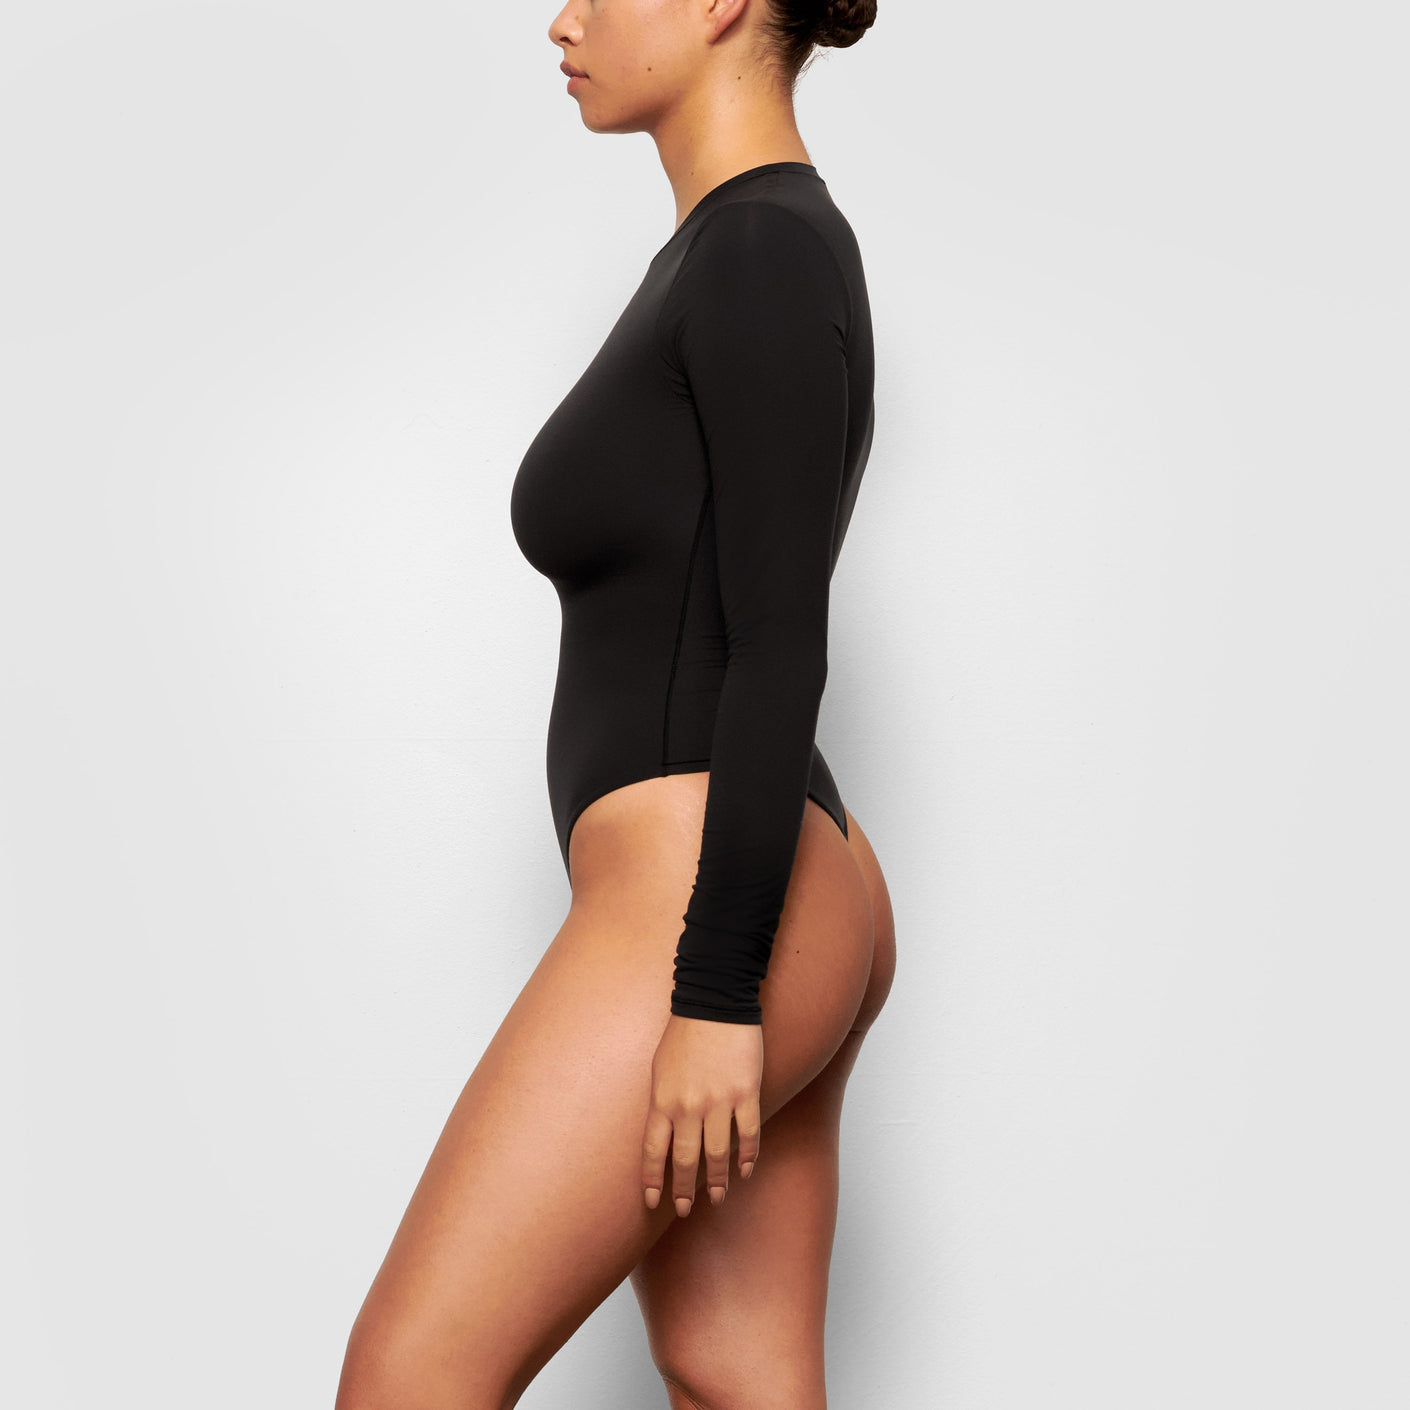 Bodysuit, Lace, black, long sleeve & more